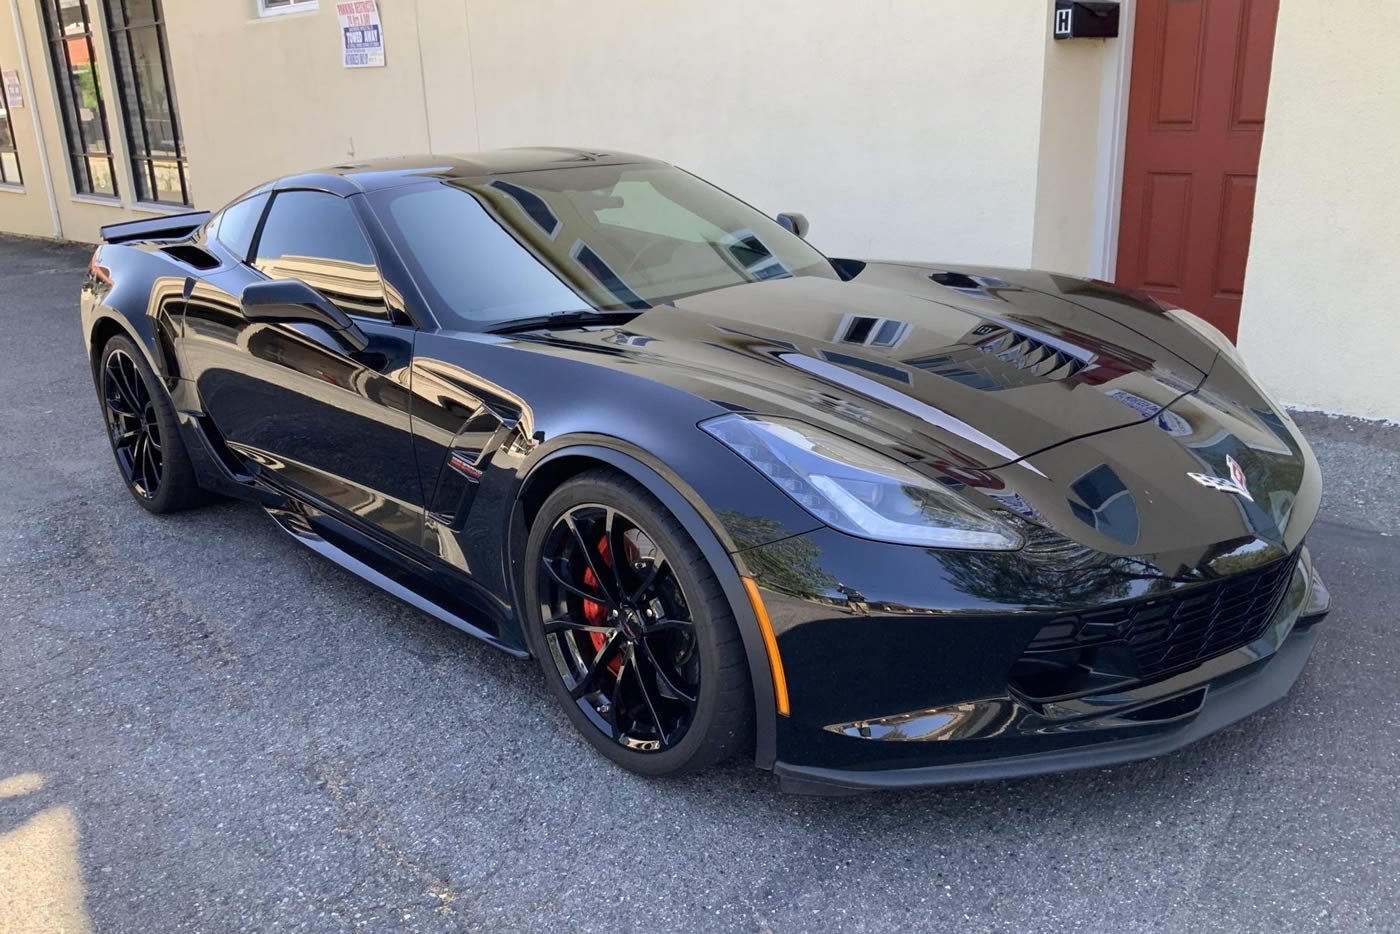 2019 Corvette Grand Sport Coupe 3LT in Black